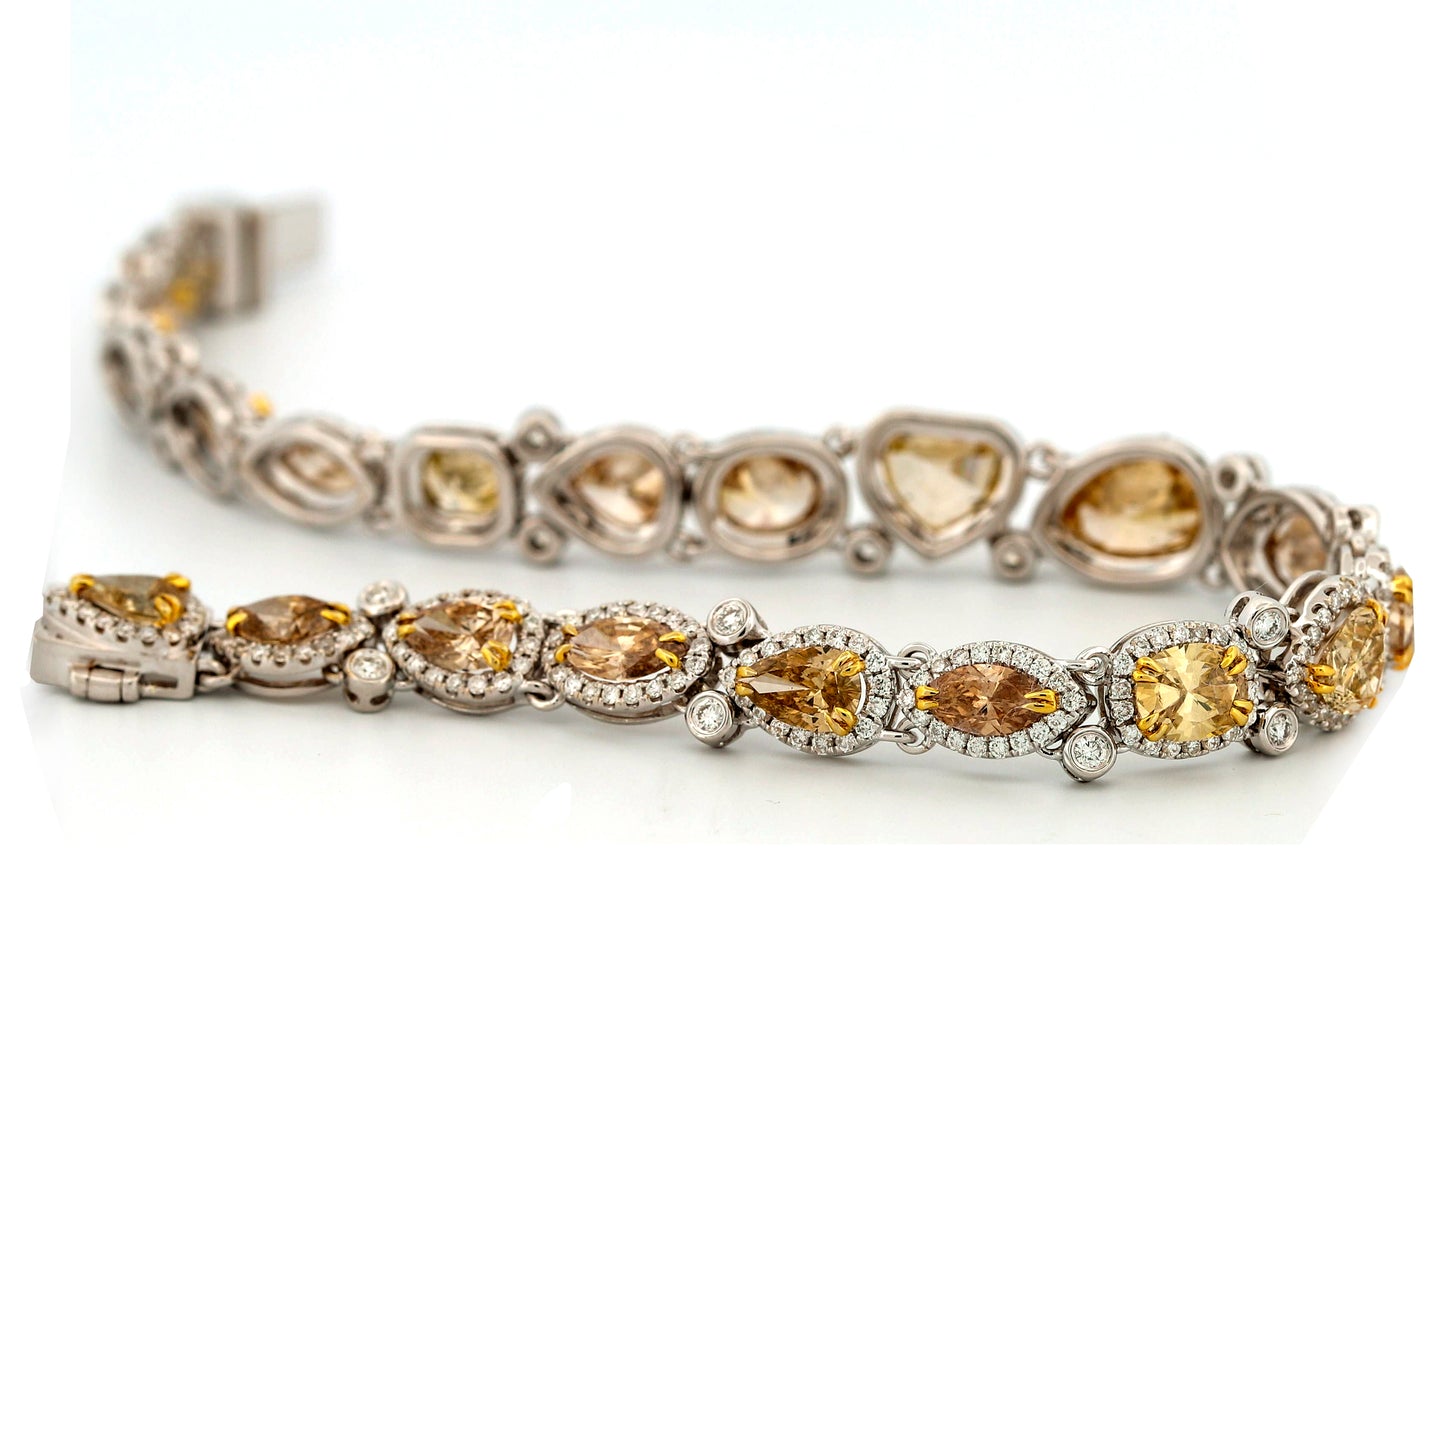 Exquisite 18k Gold Fancy Diamond Link Bracelet - Timeless Elegance